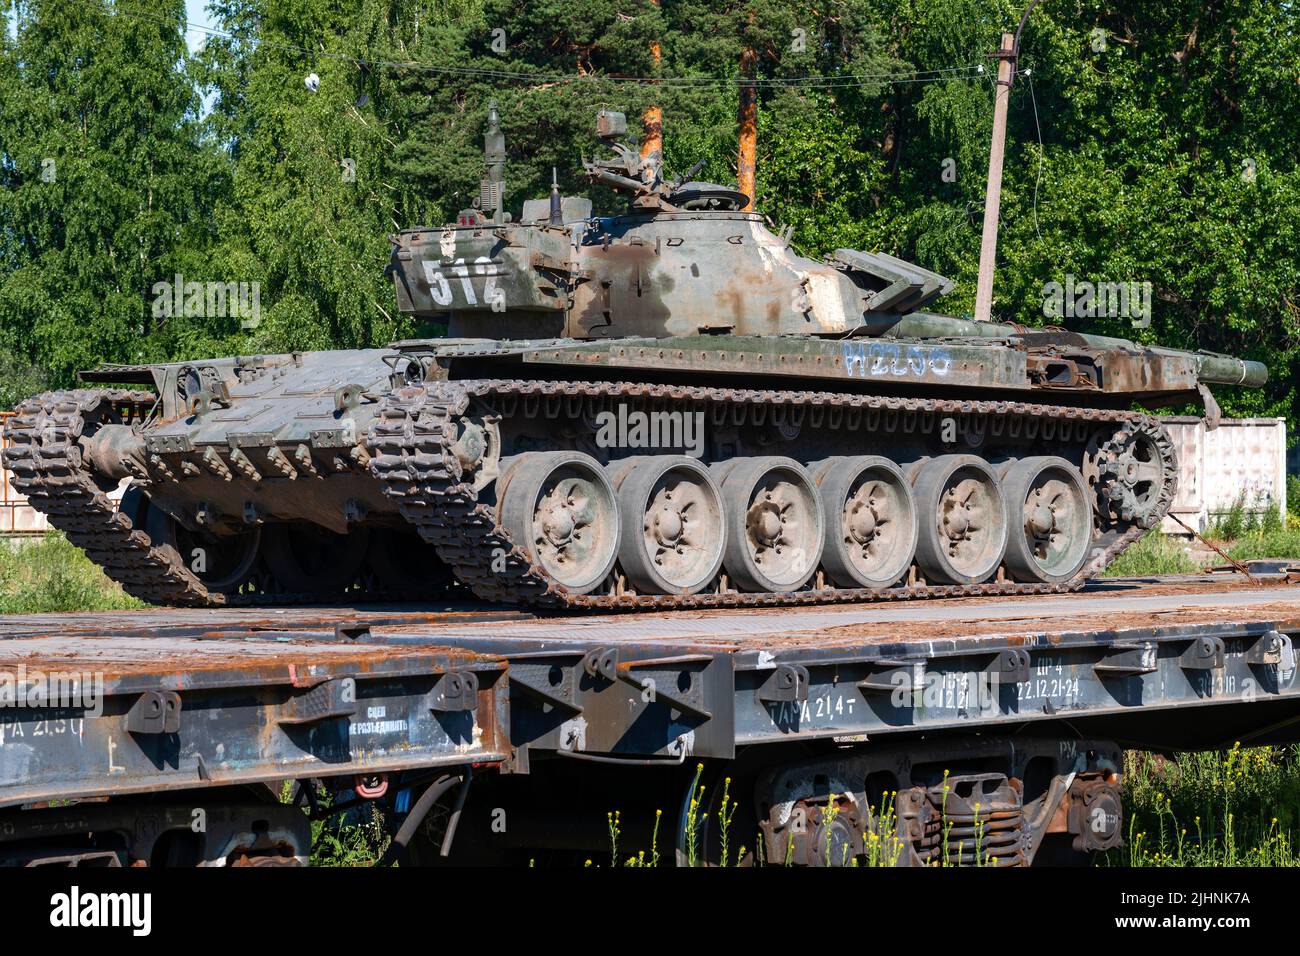 LENINGRAD REGION, RUSSIA - JULY 02, 2022: Old Russian tank on a railway platform on a sunny summer day. Transportation of military equipment Stock Photo